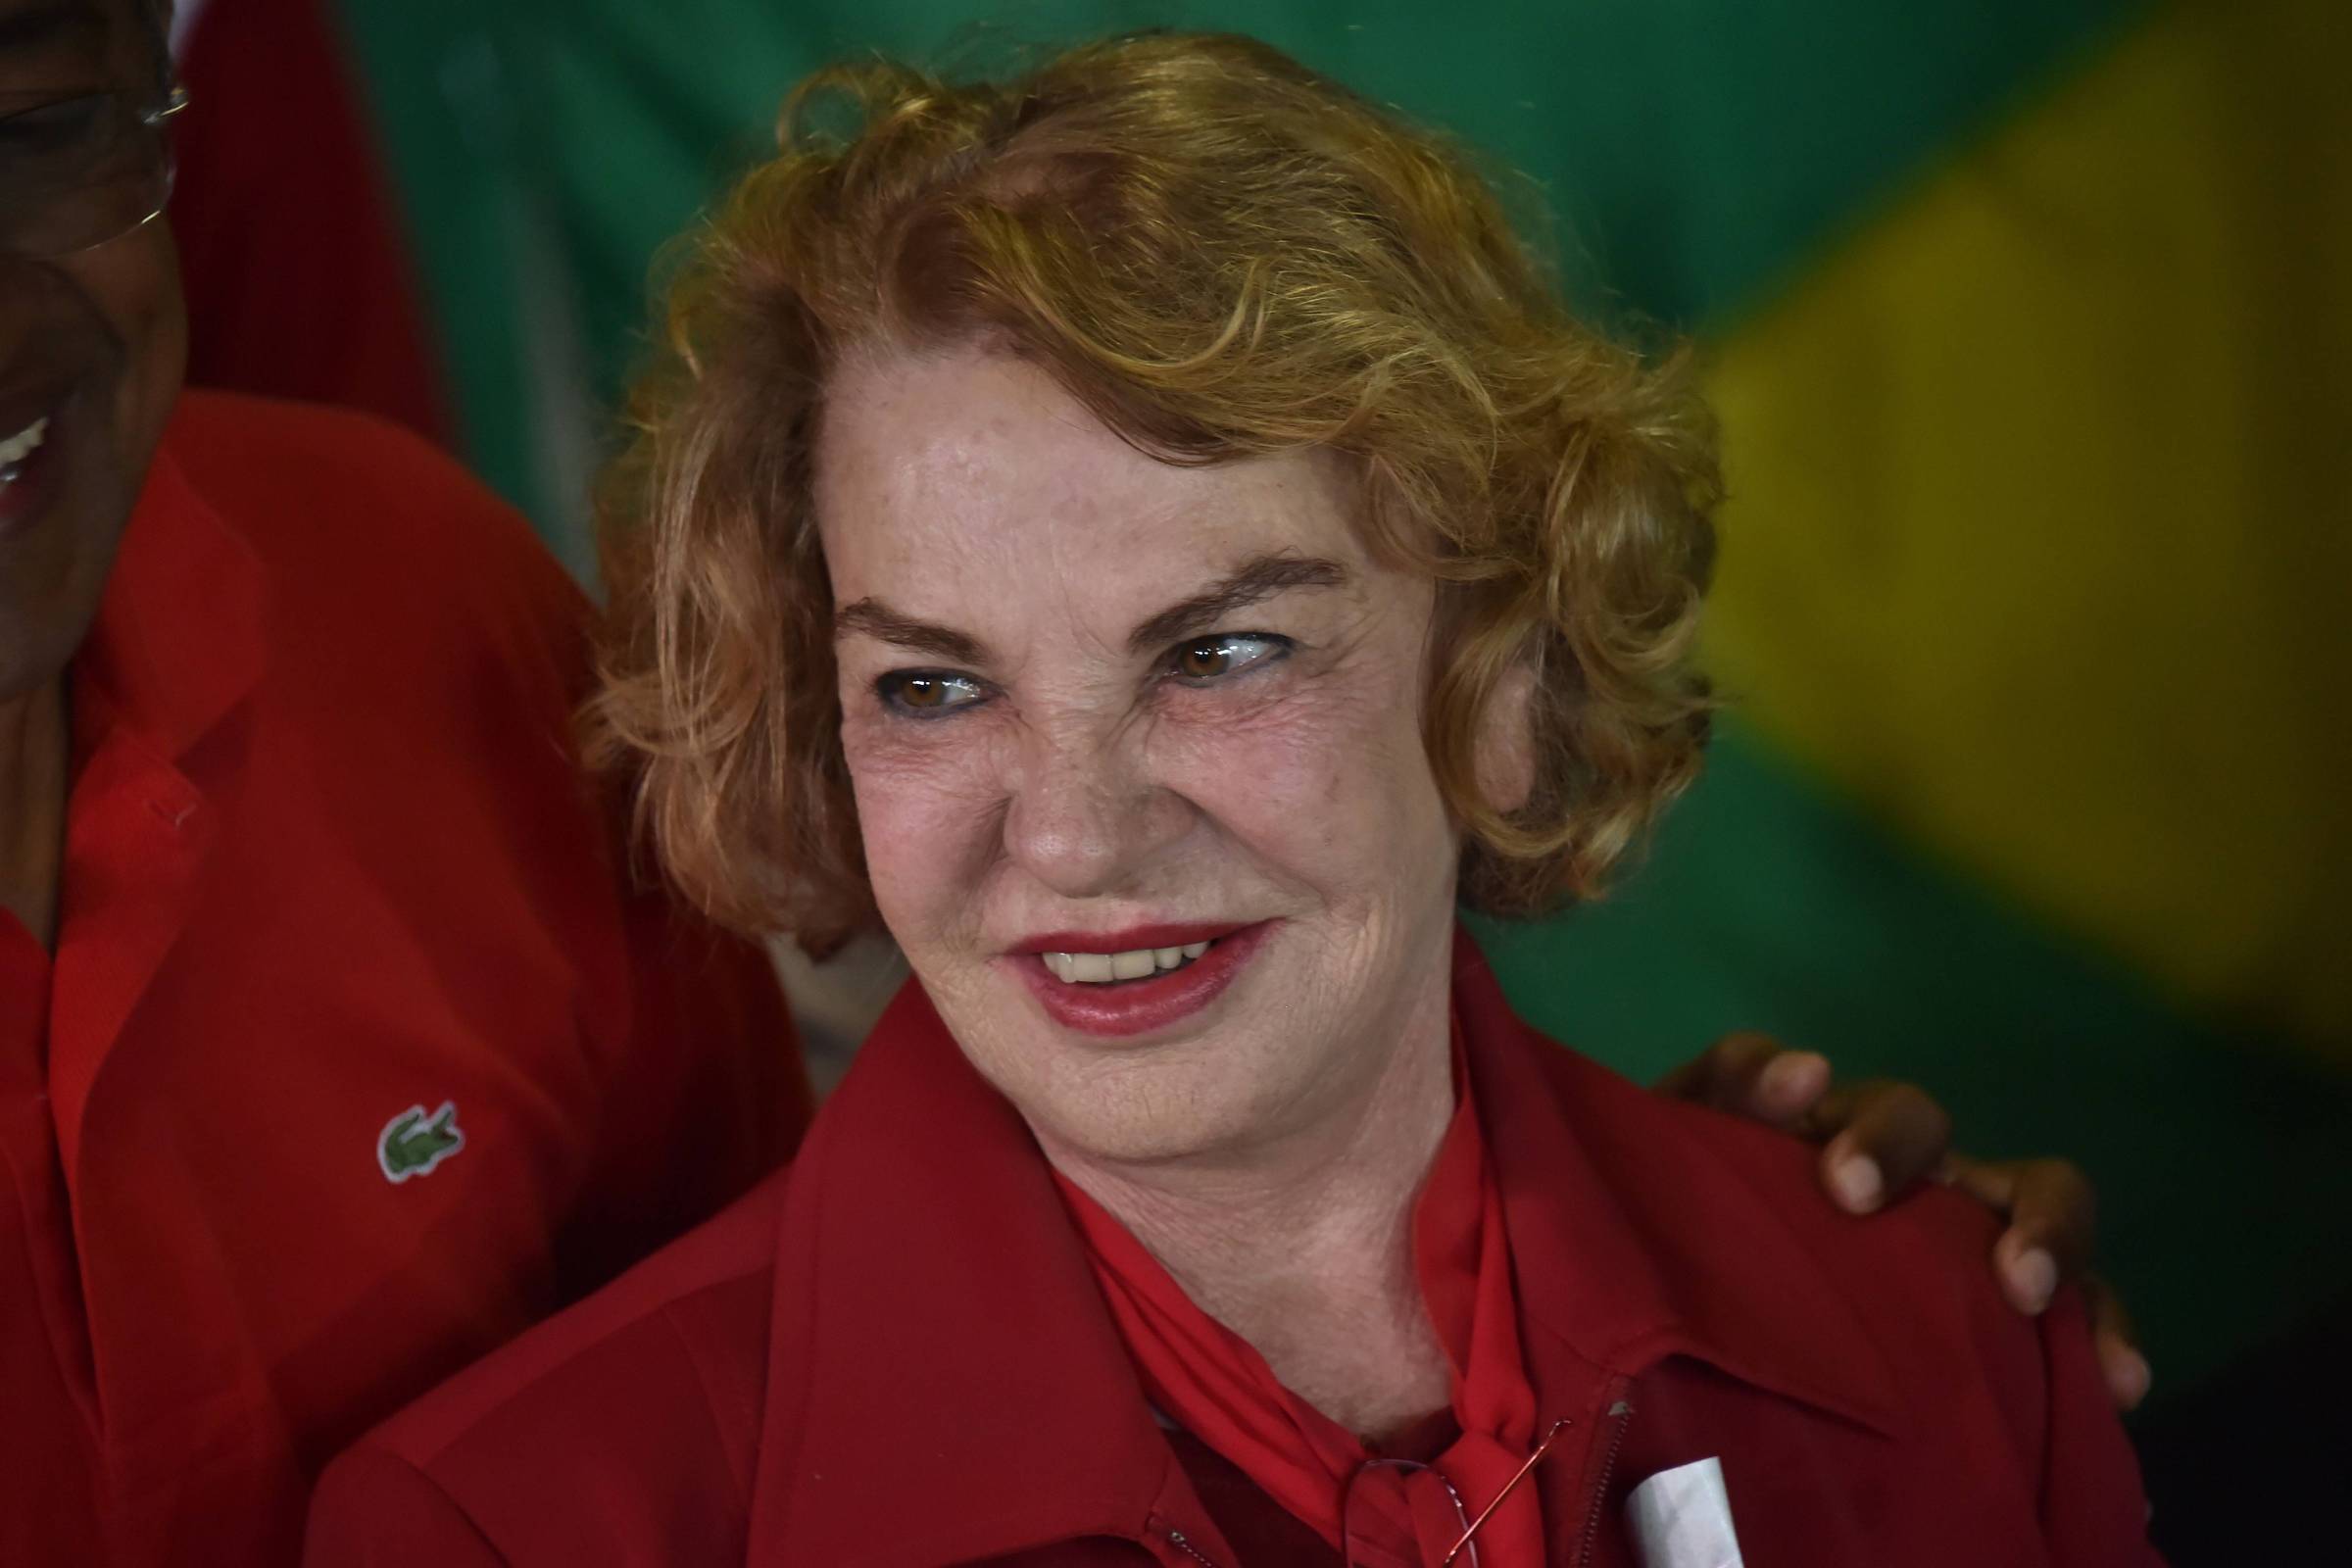 STJ évalue l’appel de Lula contre Eduardo Bolsonaro pour fausses informations sur Marisa Letícia – 29/06/2022 – Mônica Bergamo